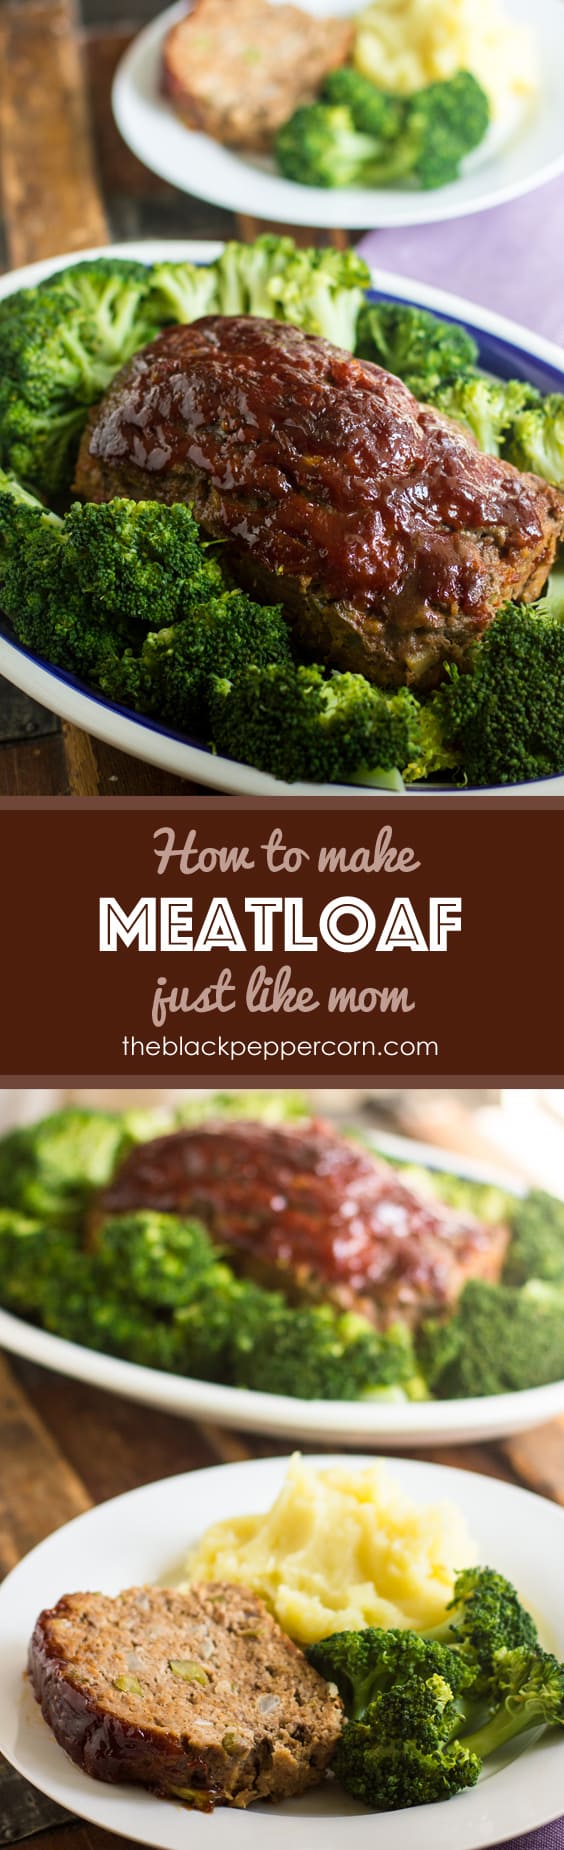 Easy meatloaf recipe the best just like mom comfort food